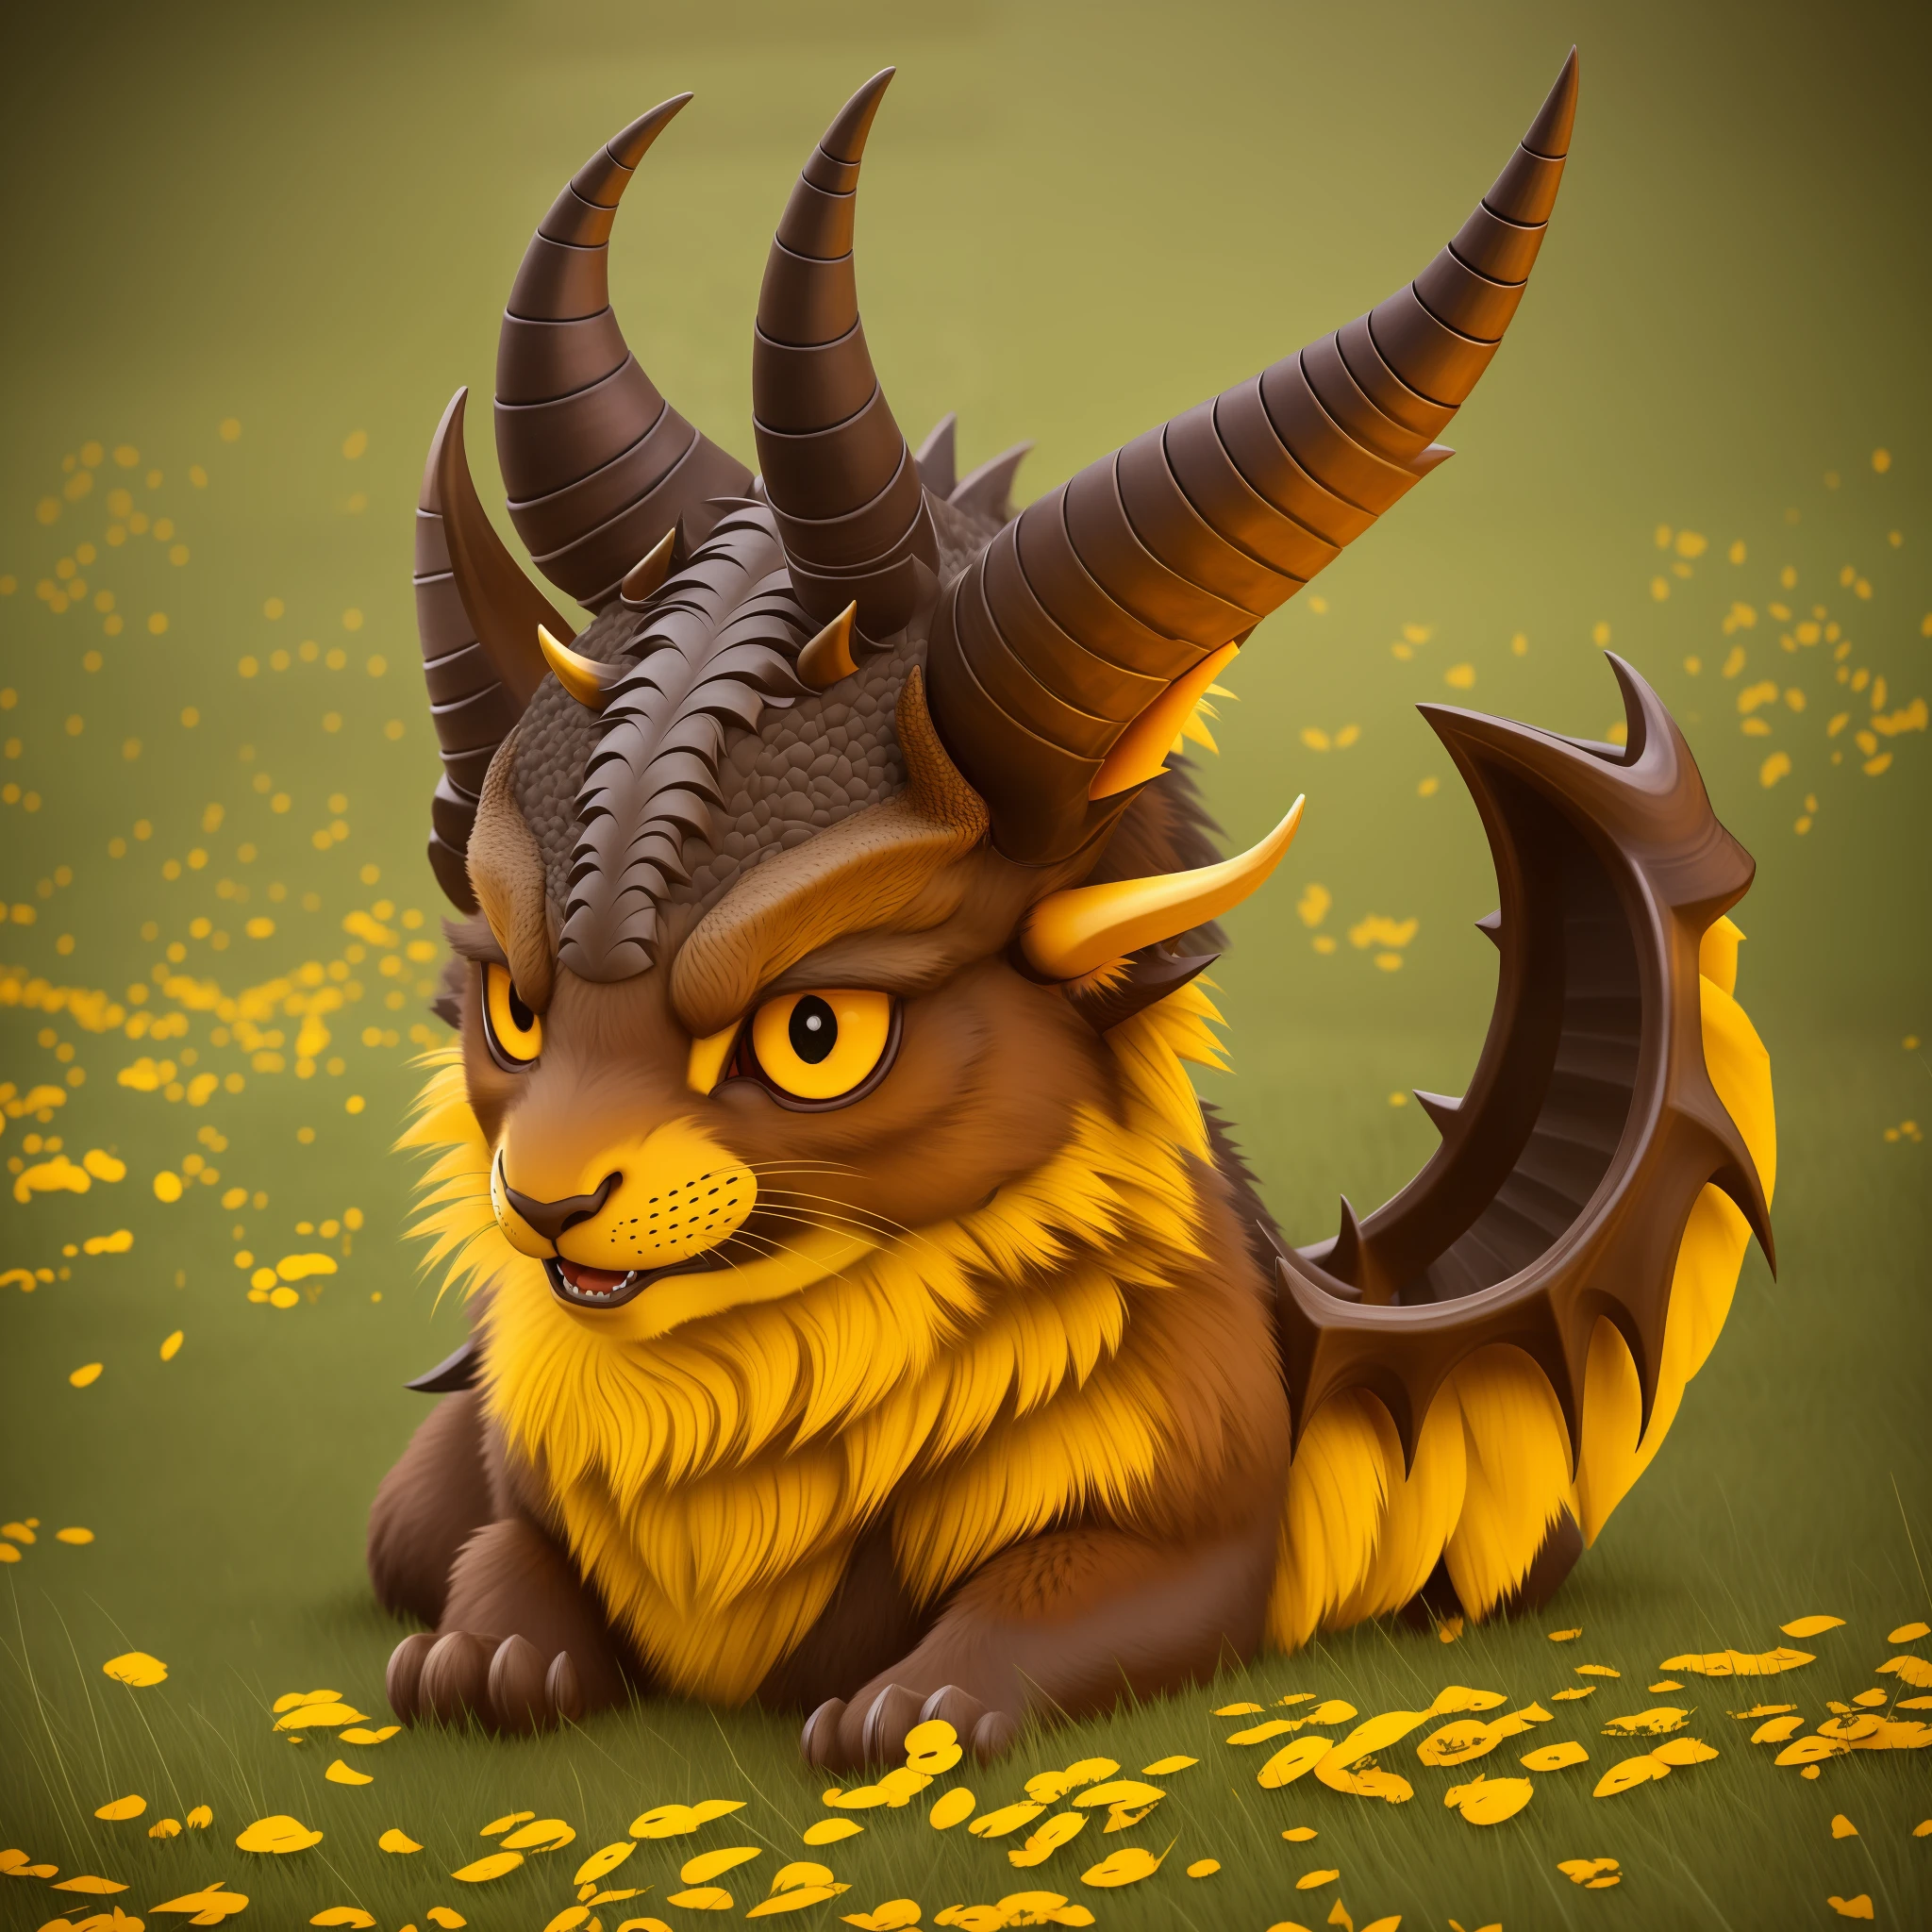 Little monster, horns, tail, dragon's head, yellow eyes, cute